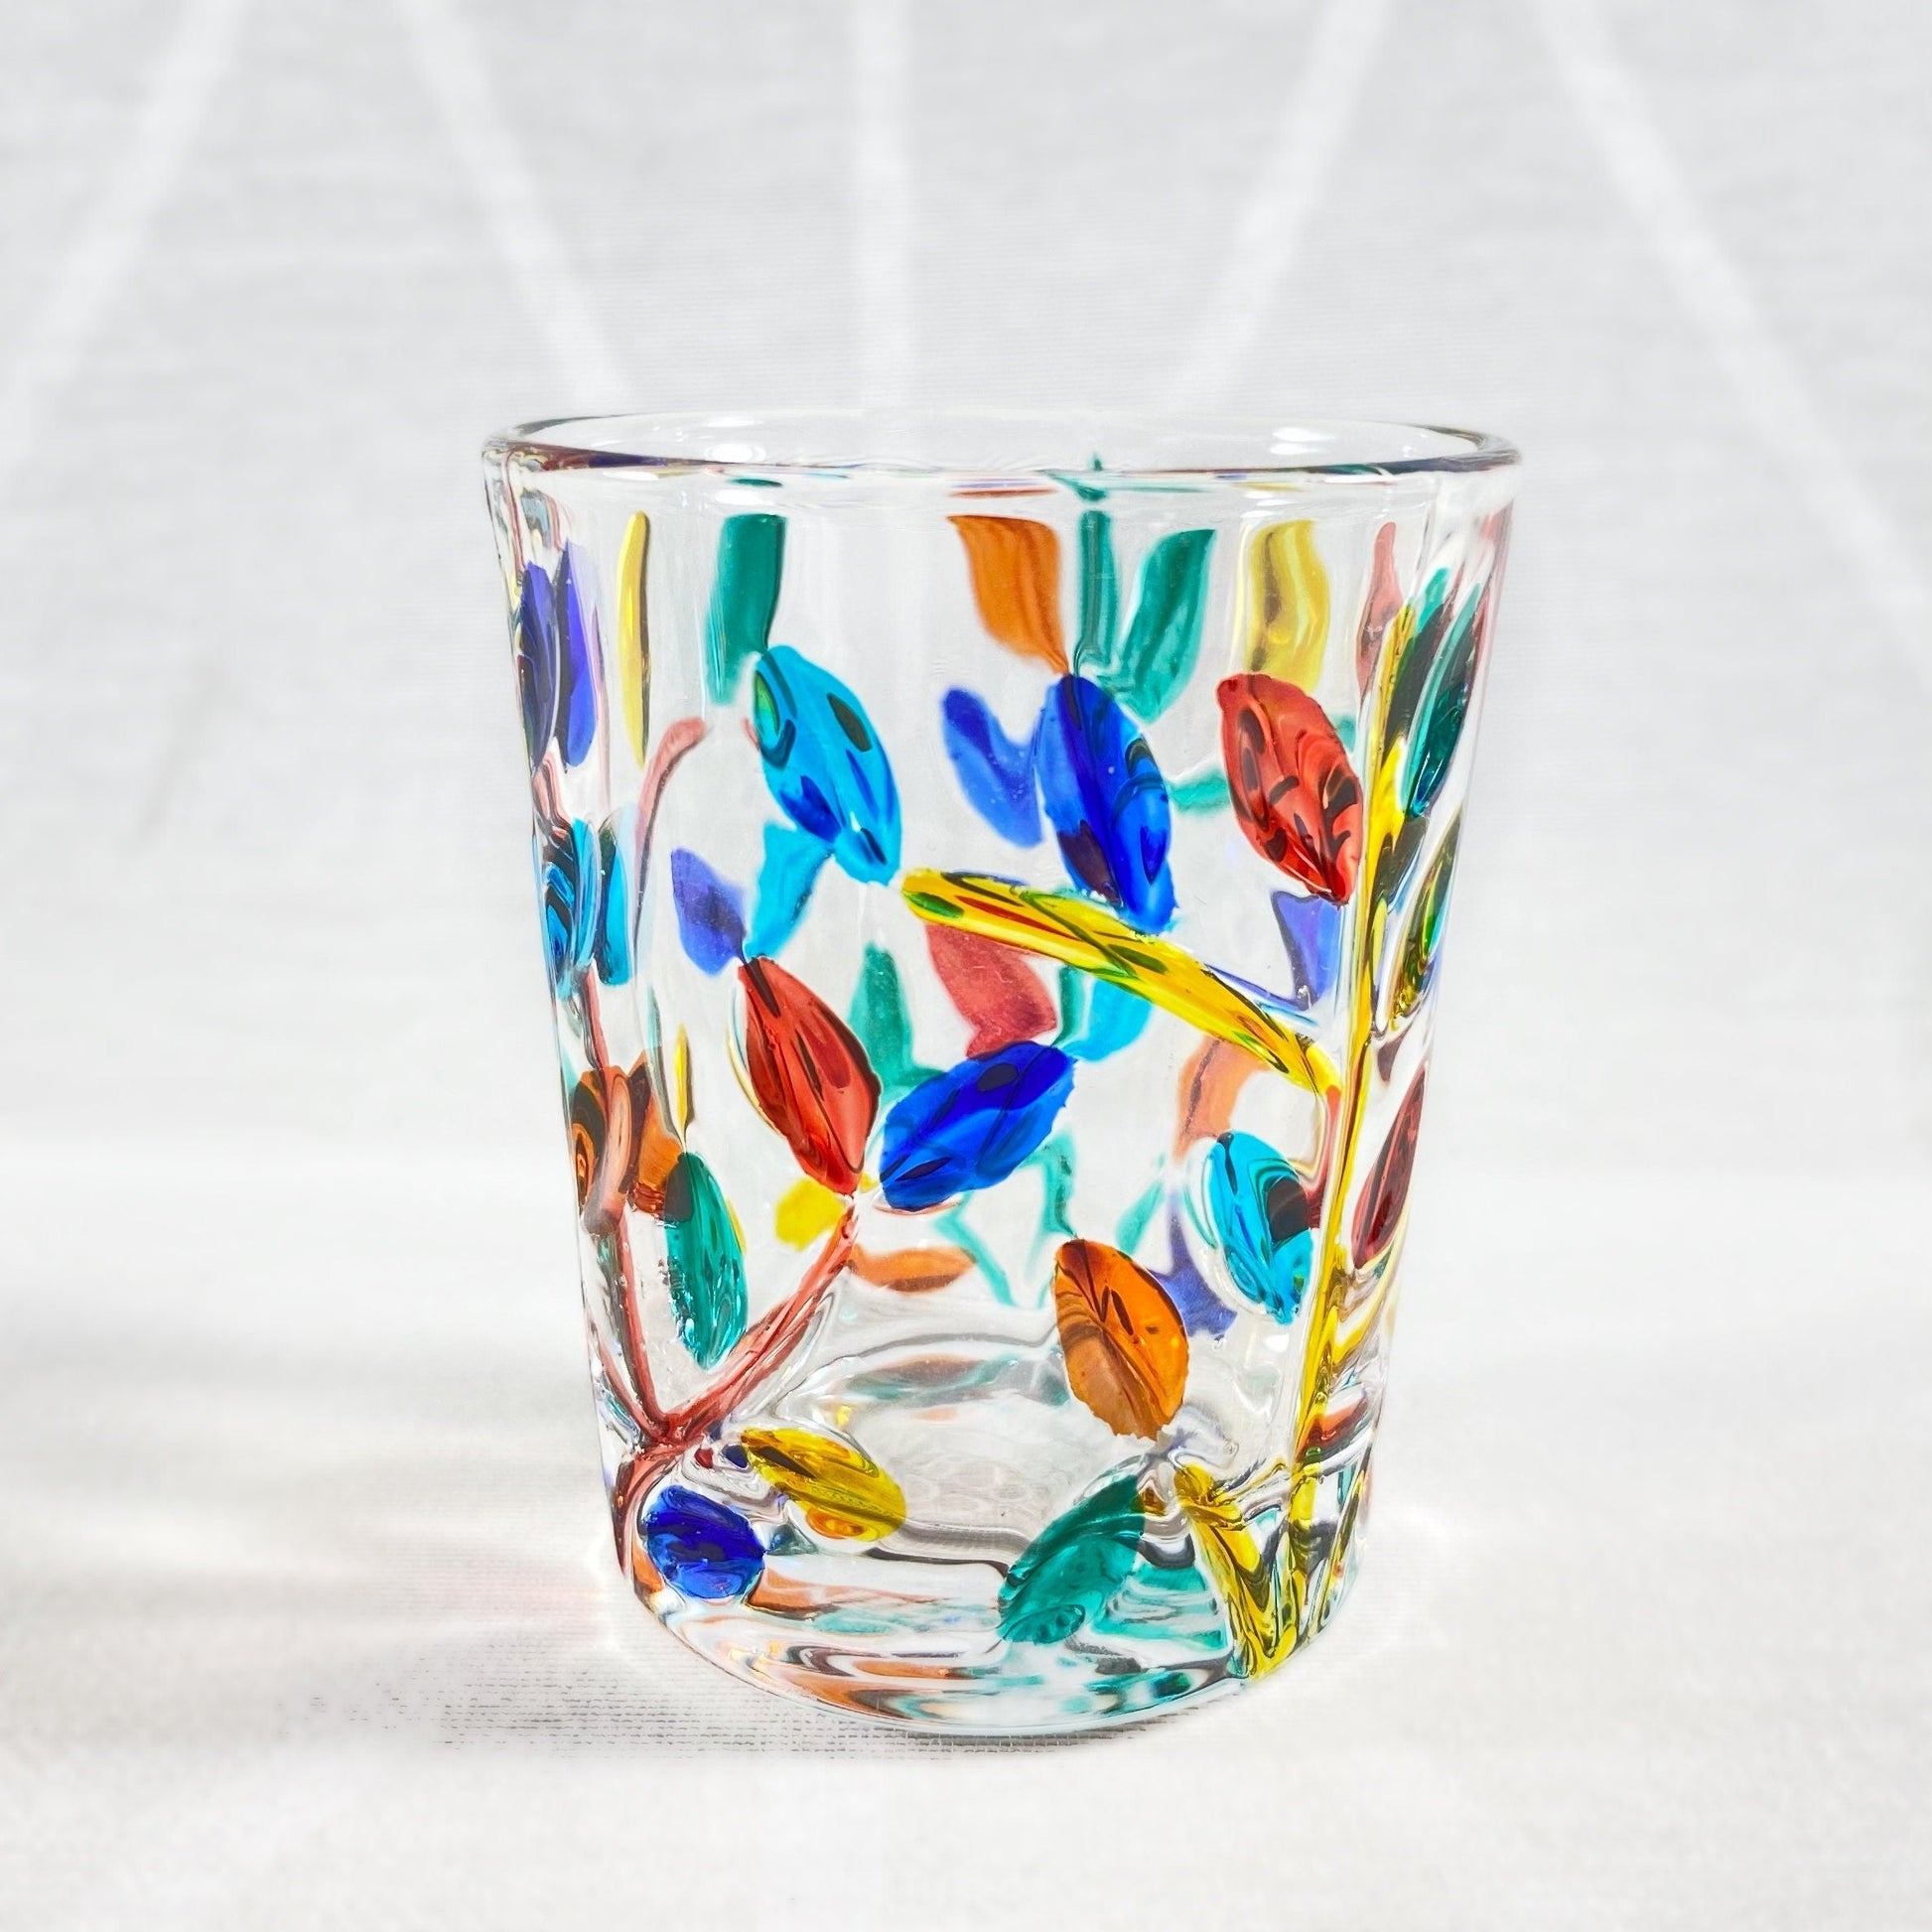 Venetian Glass Tree of Life Liquor/Shot Glass - Handmade in Italy, Colorful Murano Glass